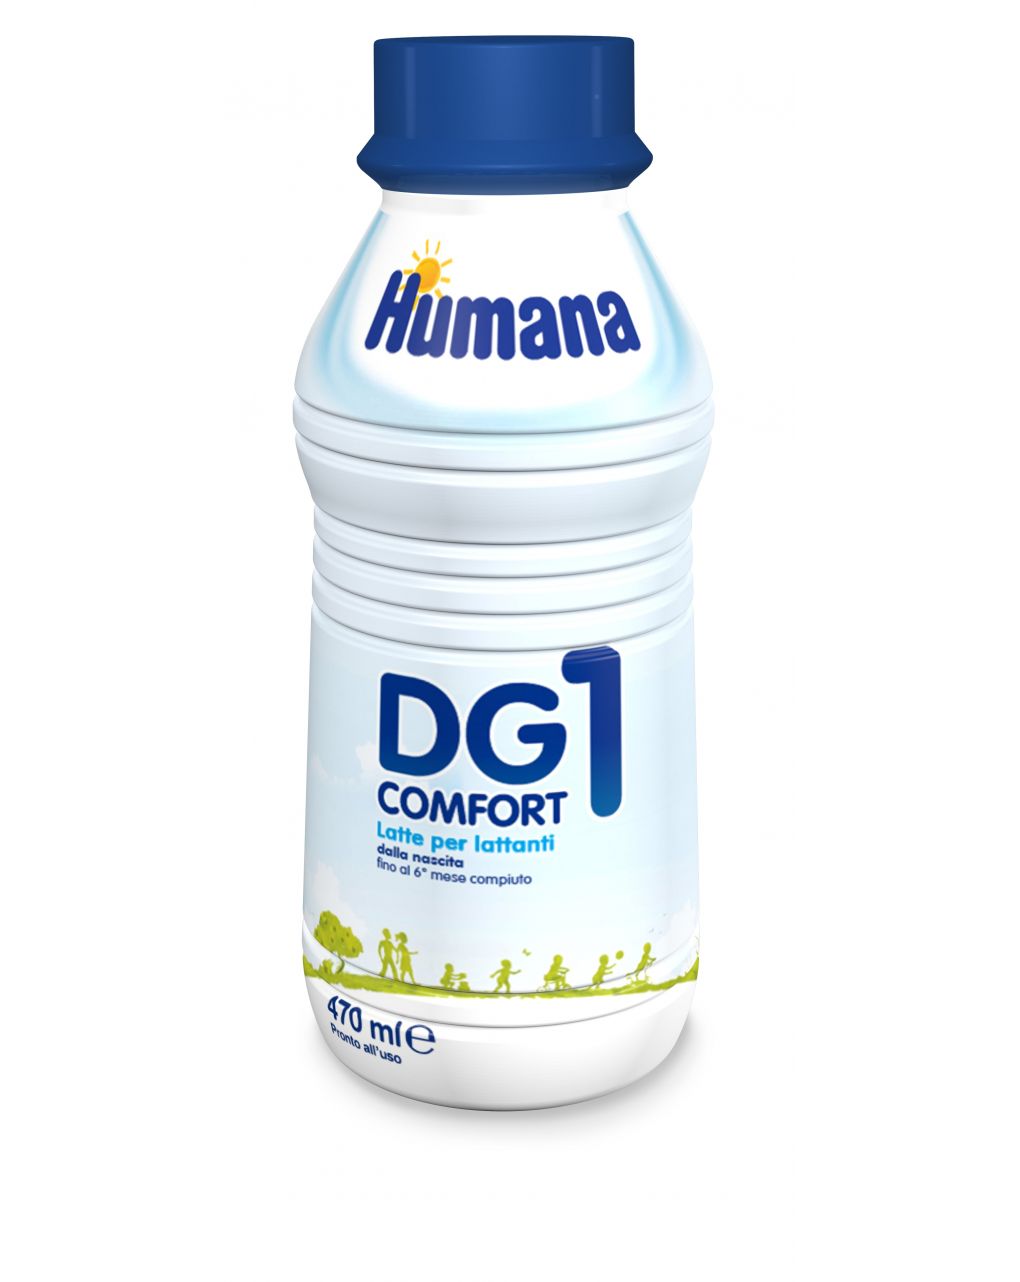 Latte dg comfort 1 liquido 470ml - humana - Humana